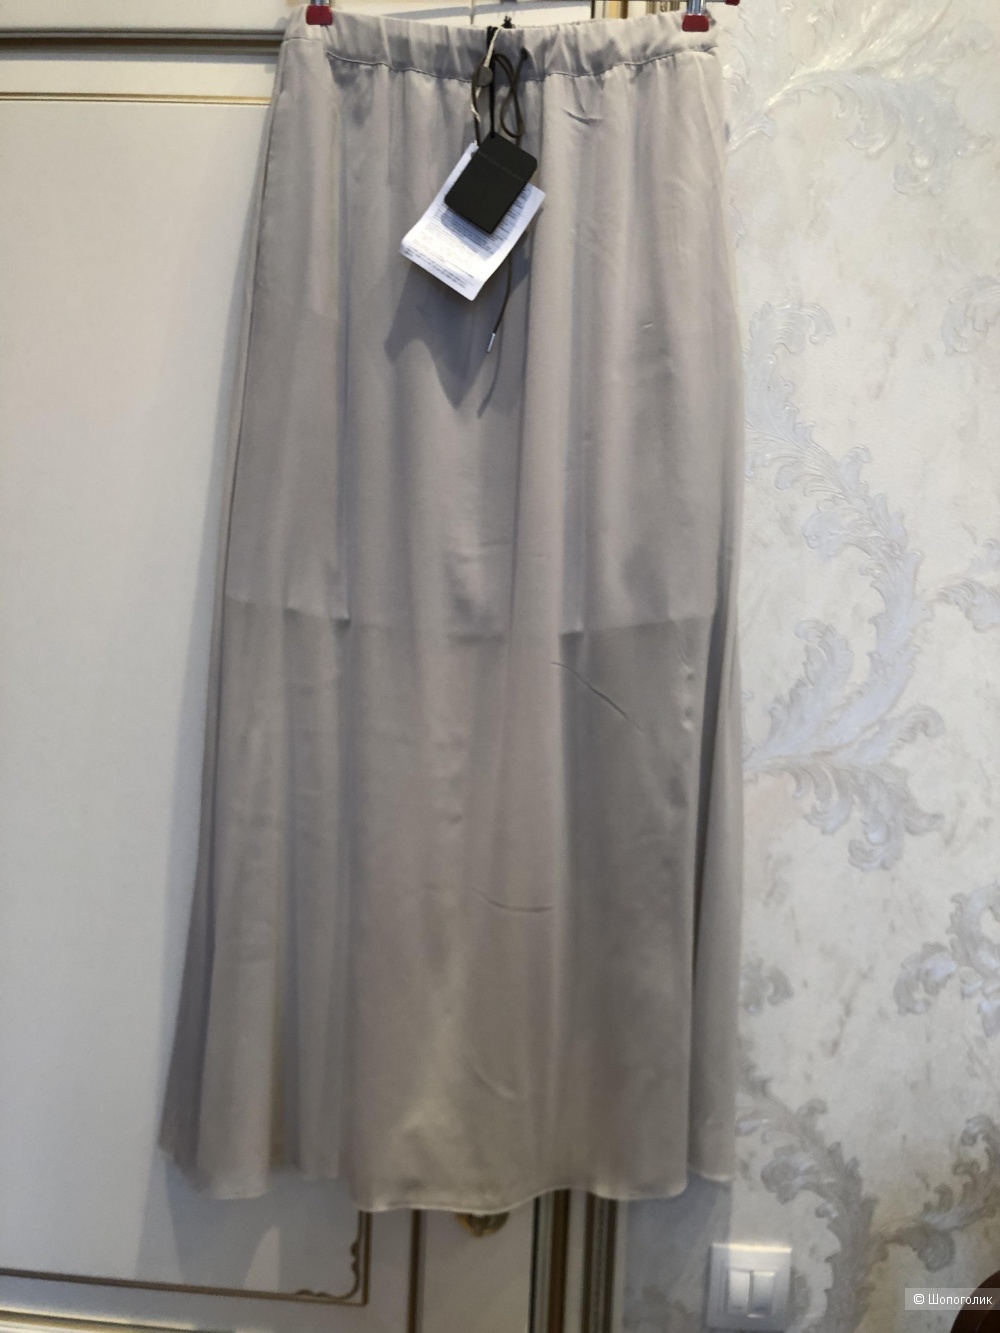 Шелковая юбка FABIANA FILIPPI, размер S-M